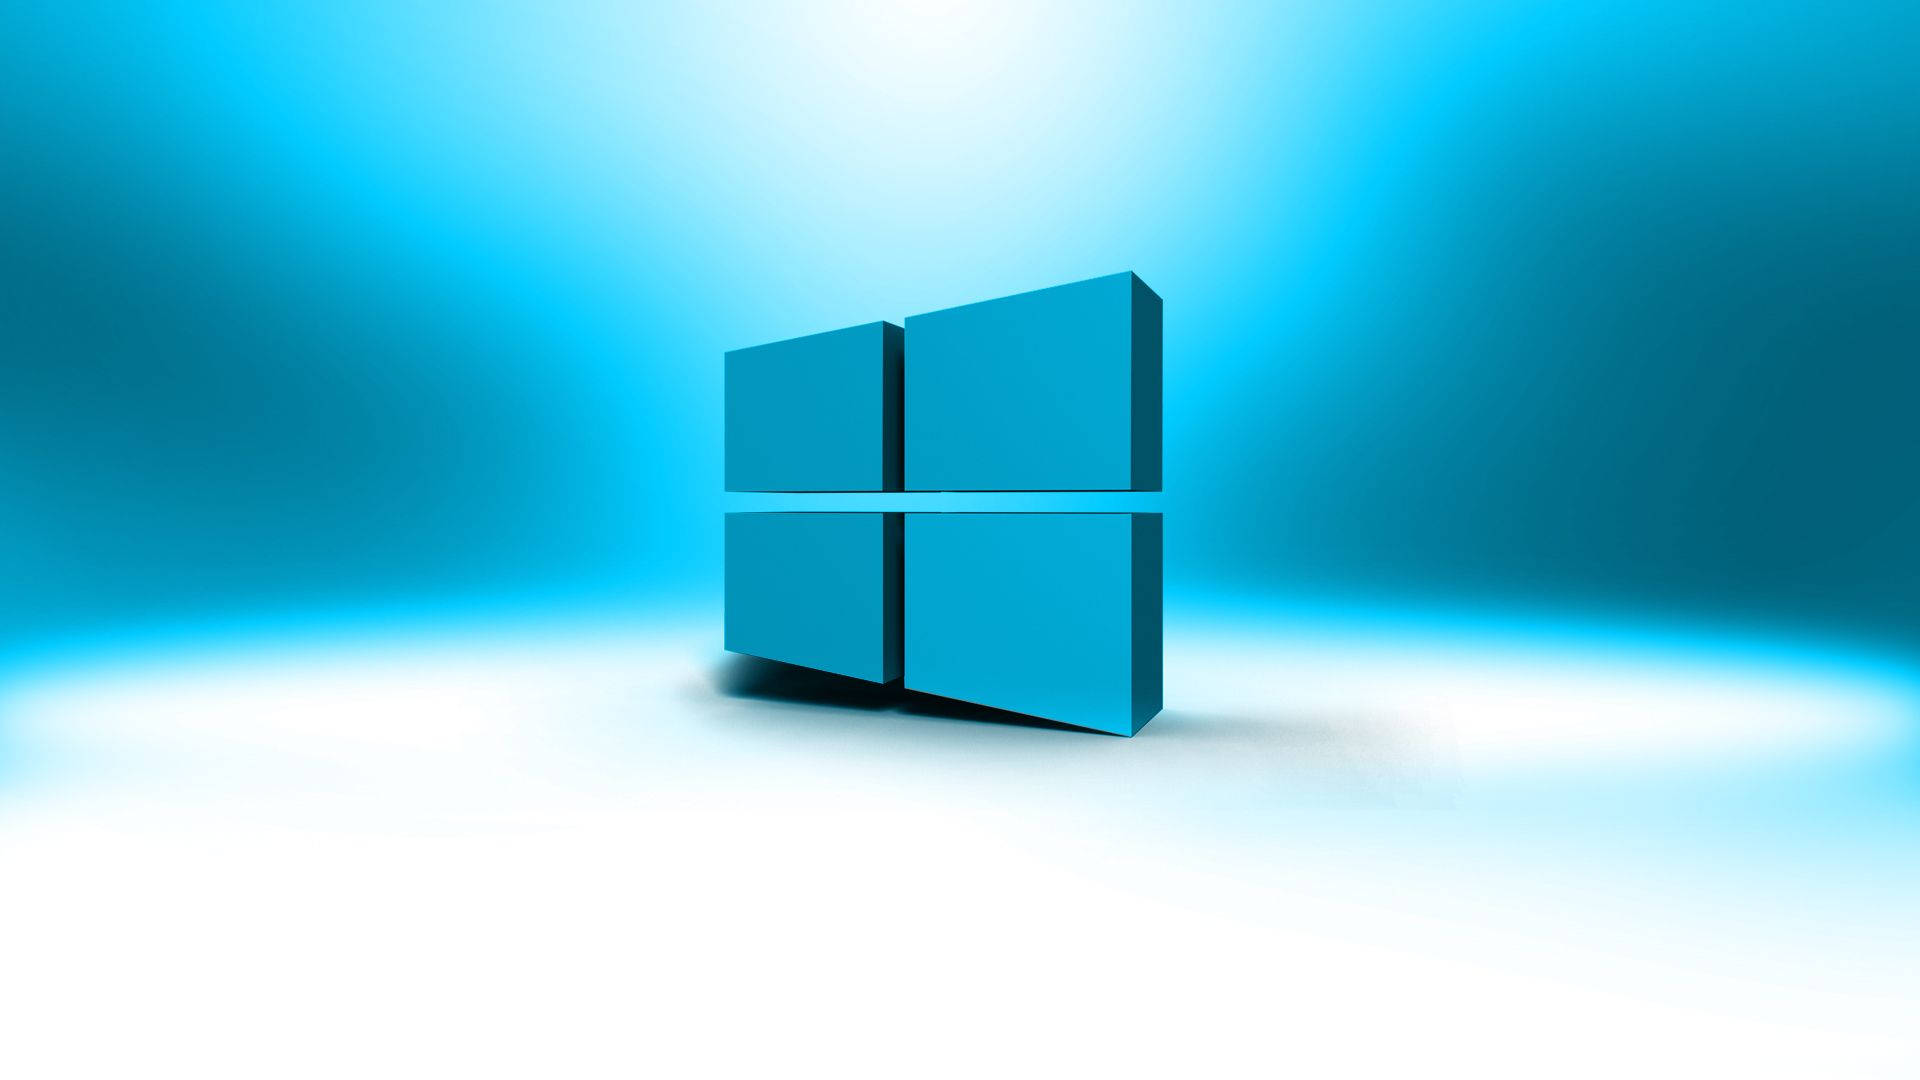 Windows 10 Hd Blue 3d Logo Background